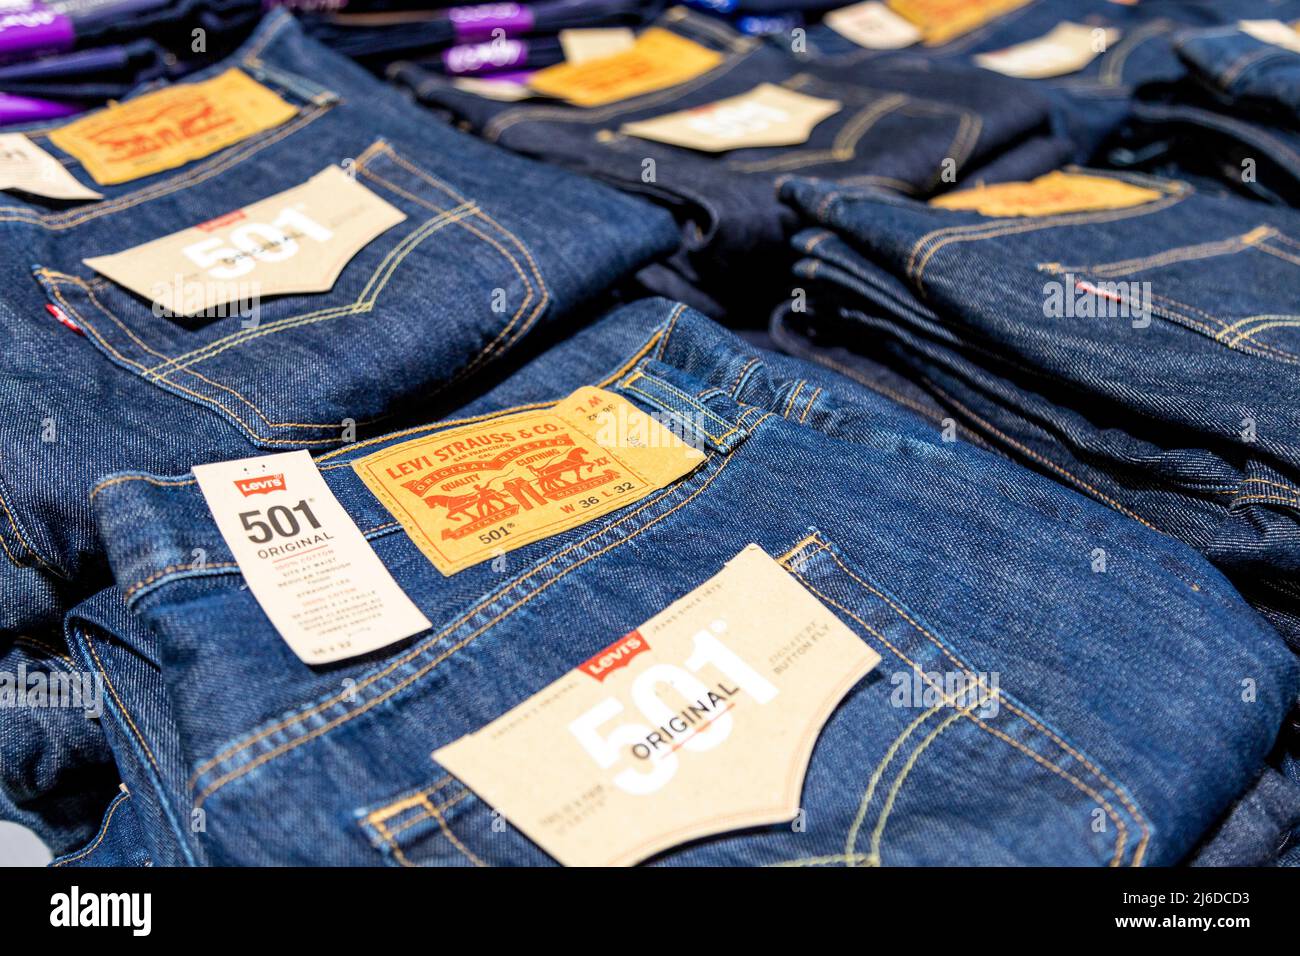 Stacks of folded up Levi's blue jeans Stock Photo